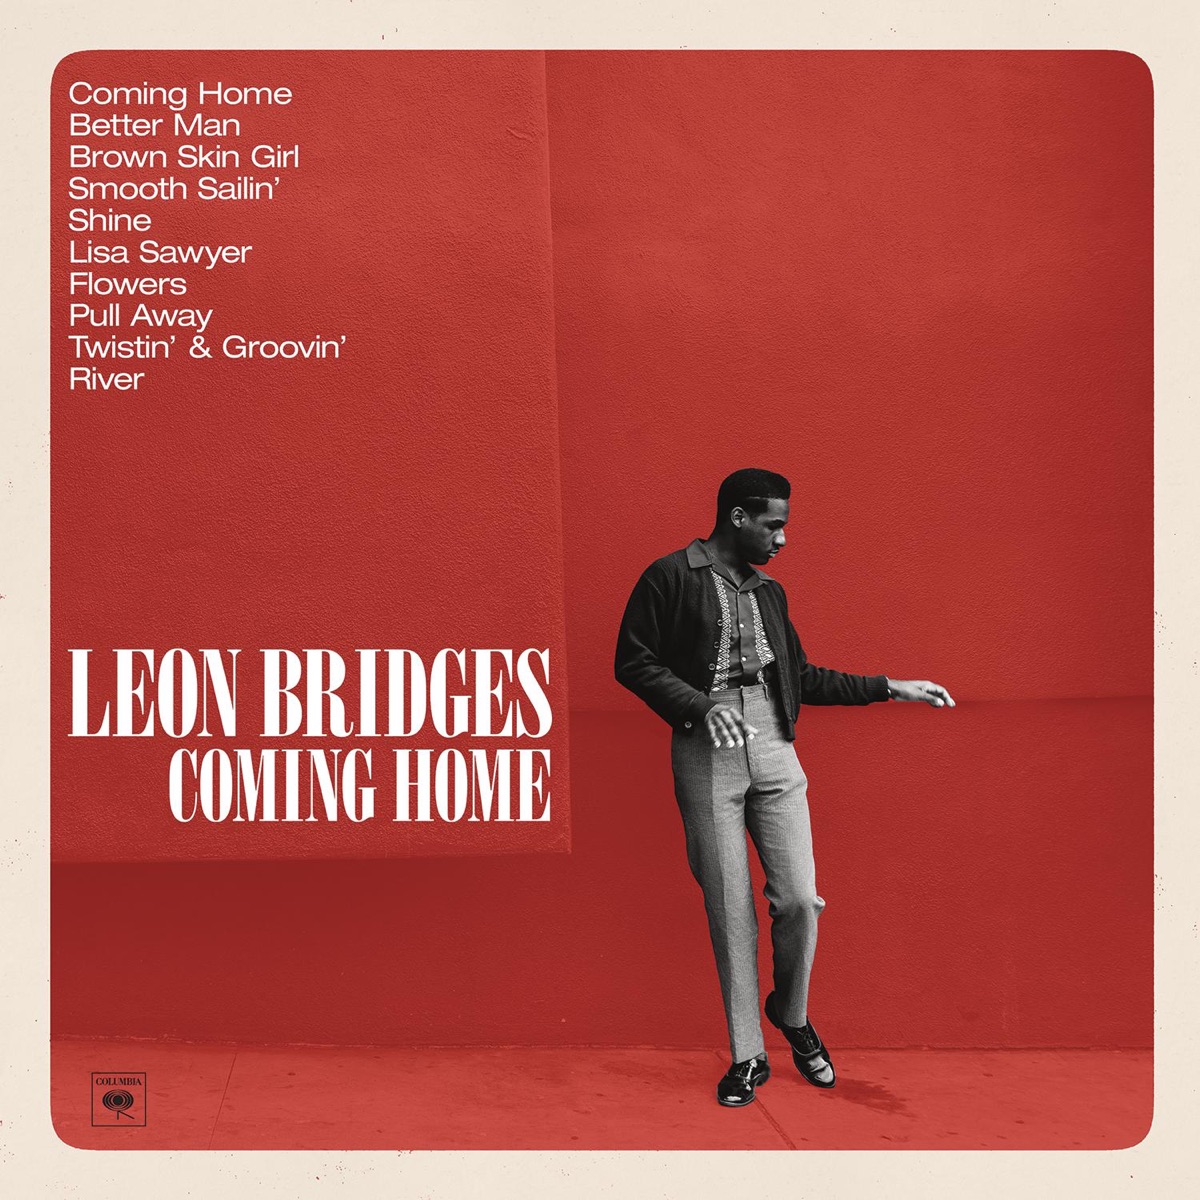 ‎Coming Home - Album by Leon Bridges - Apple Music